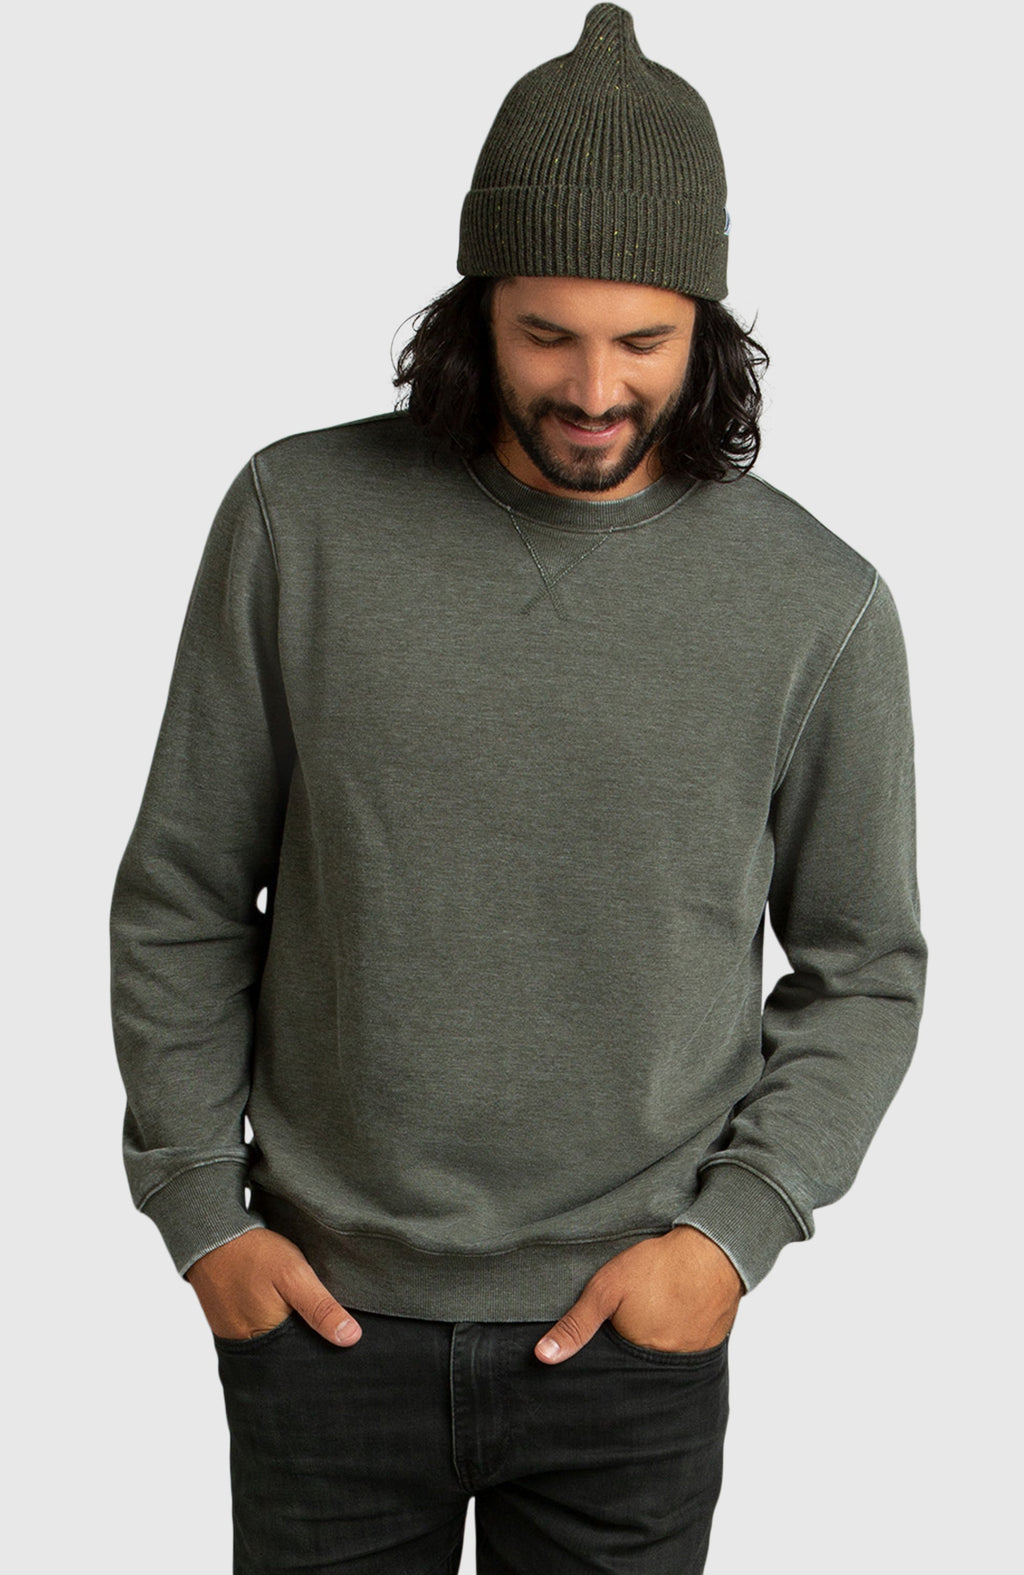 Army Green Fleece Crewneck Sweatshirt for Men | Boston Traders